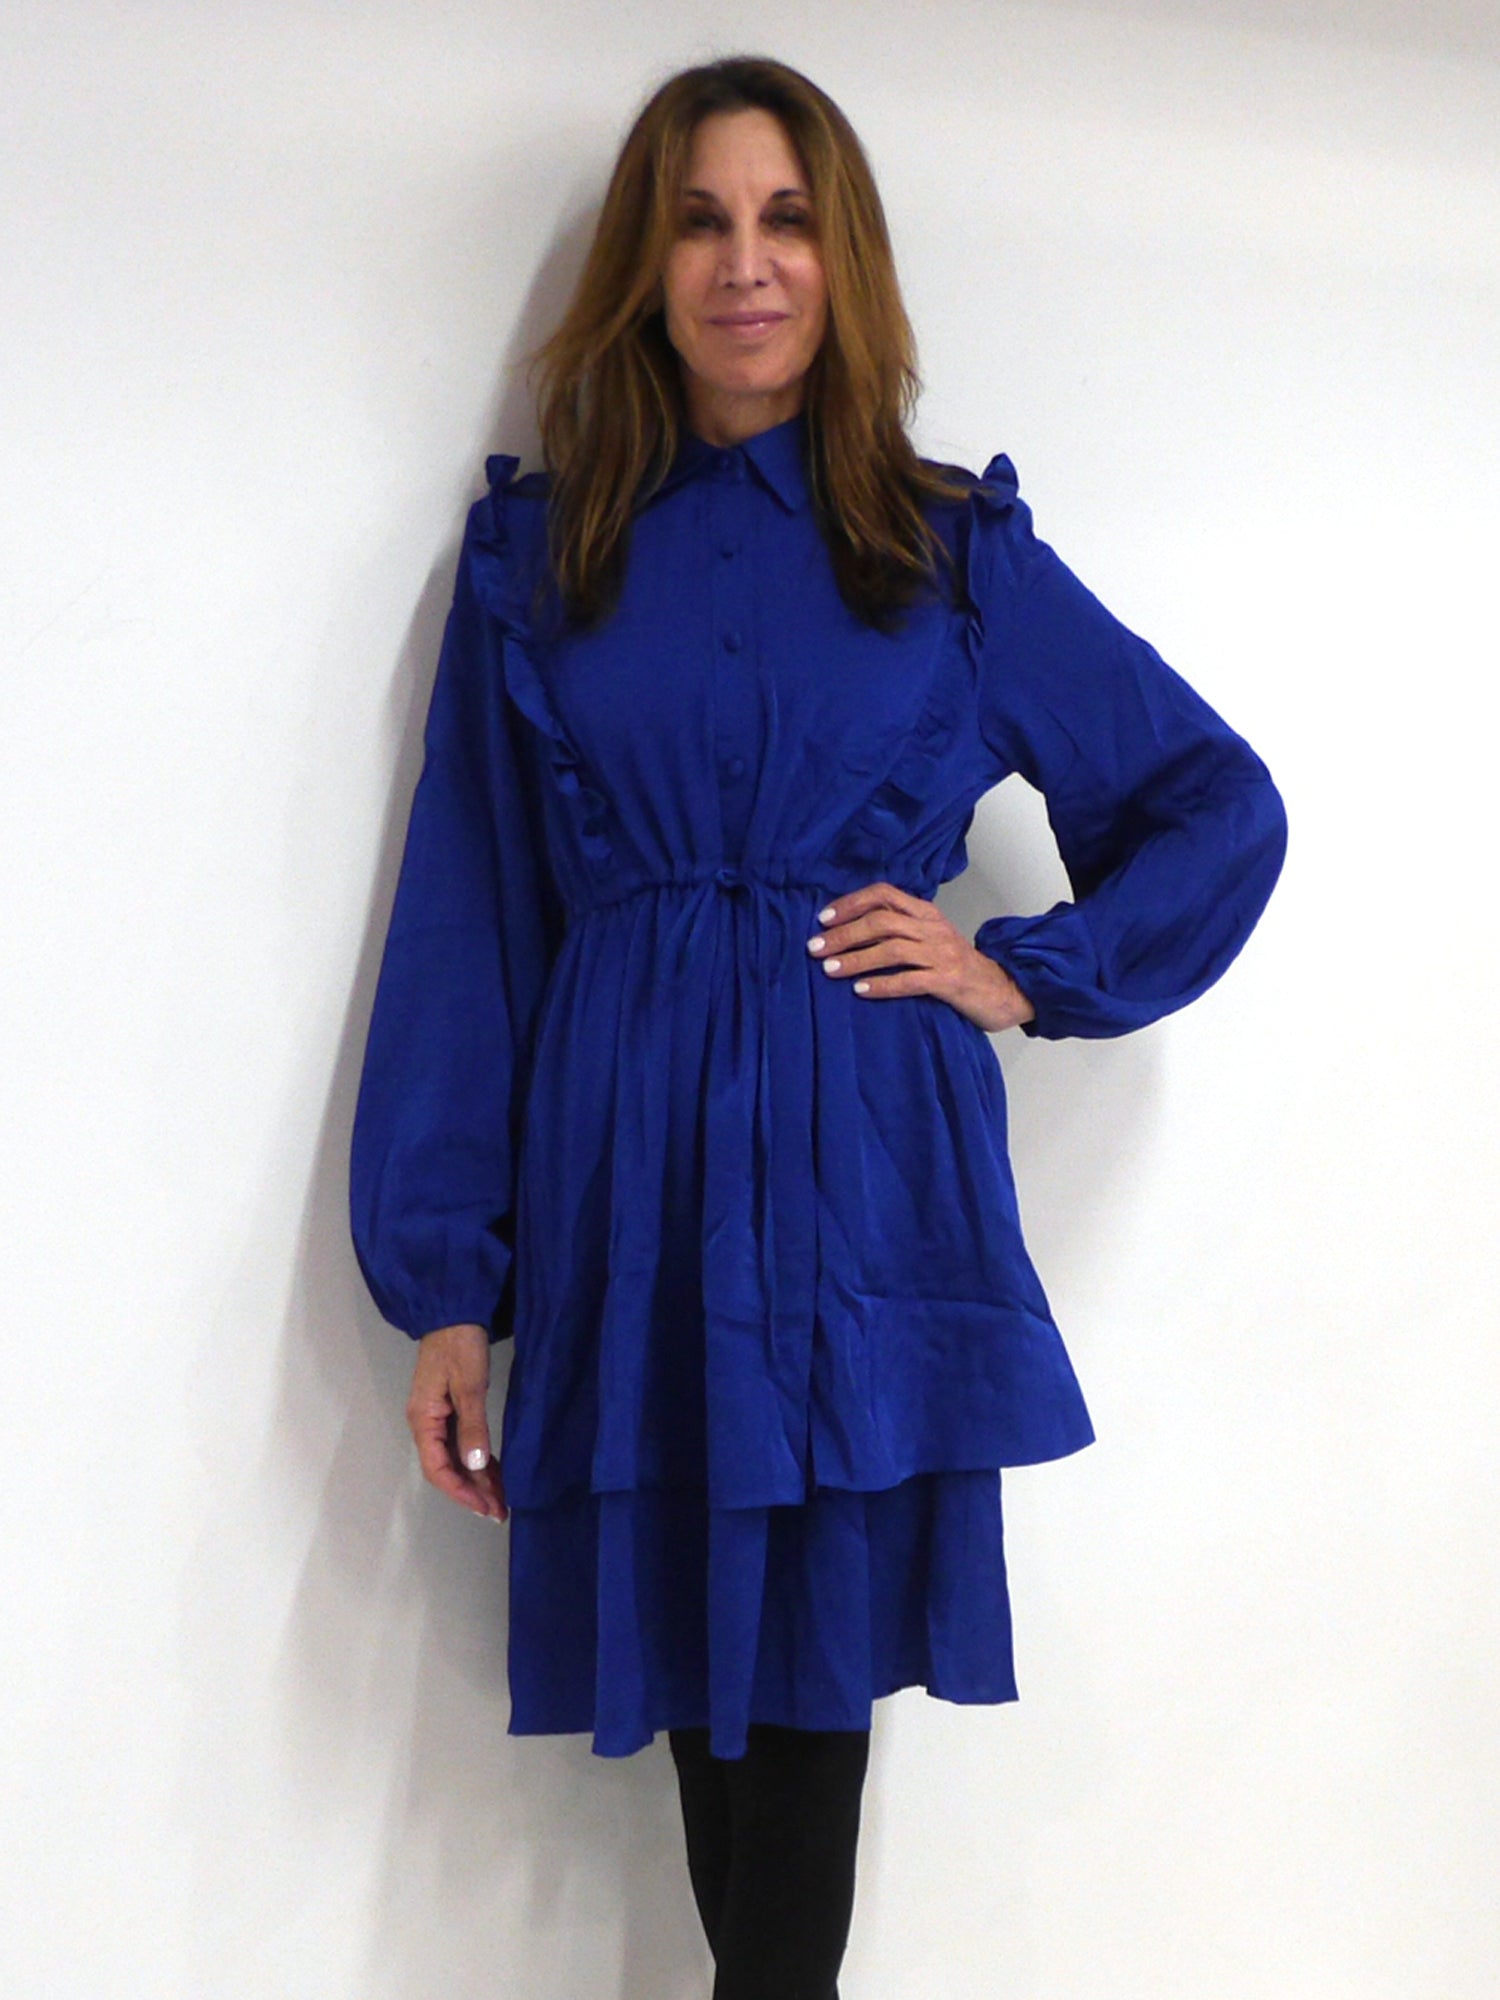 Unigirl Paris Ruffled Front Royal Blue Dress - Dresses